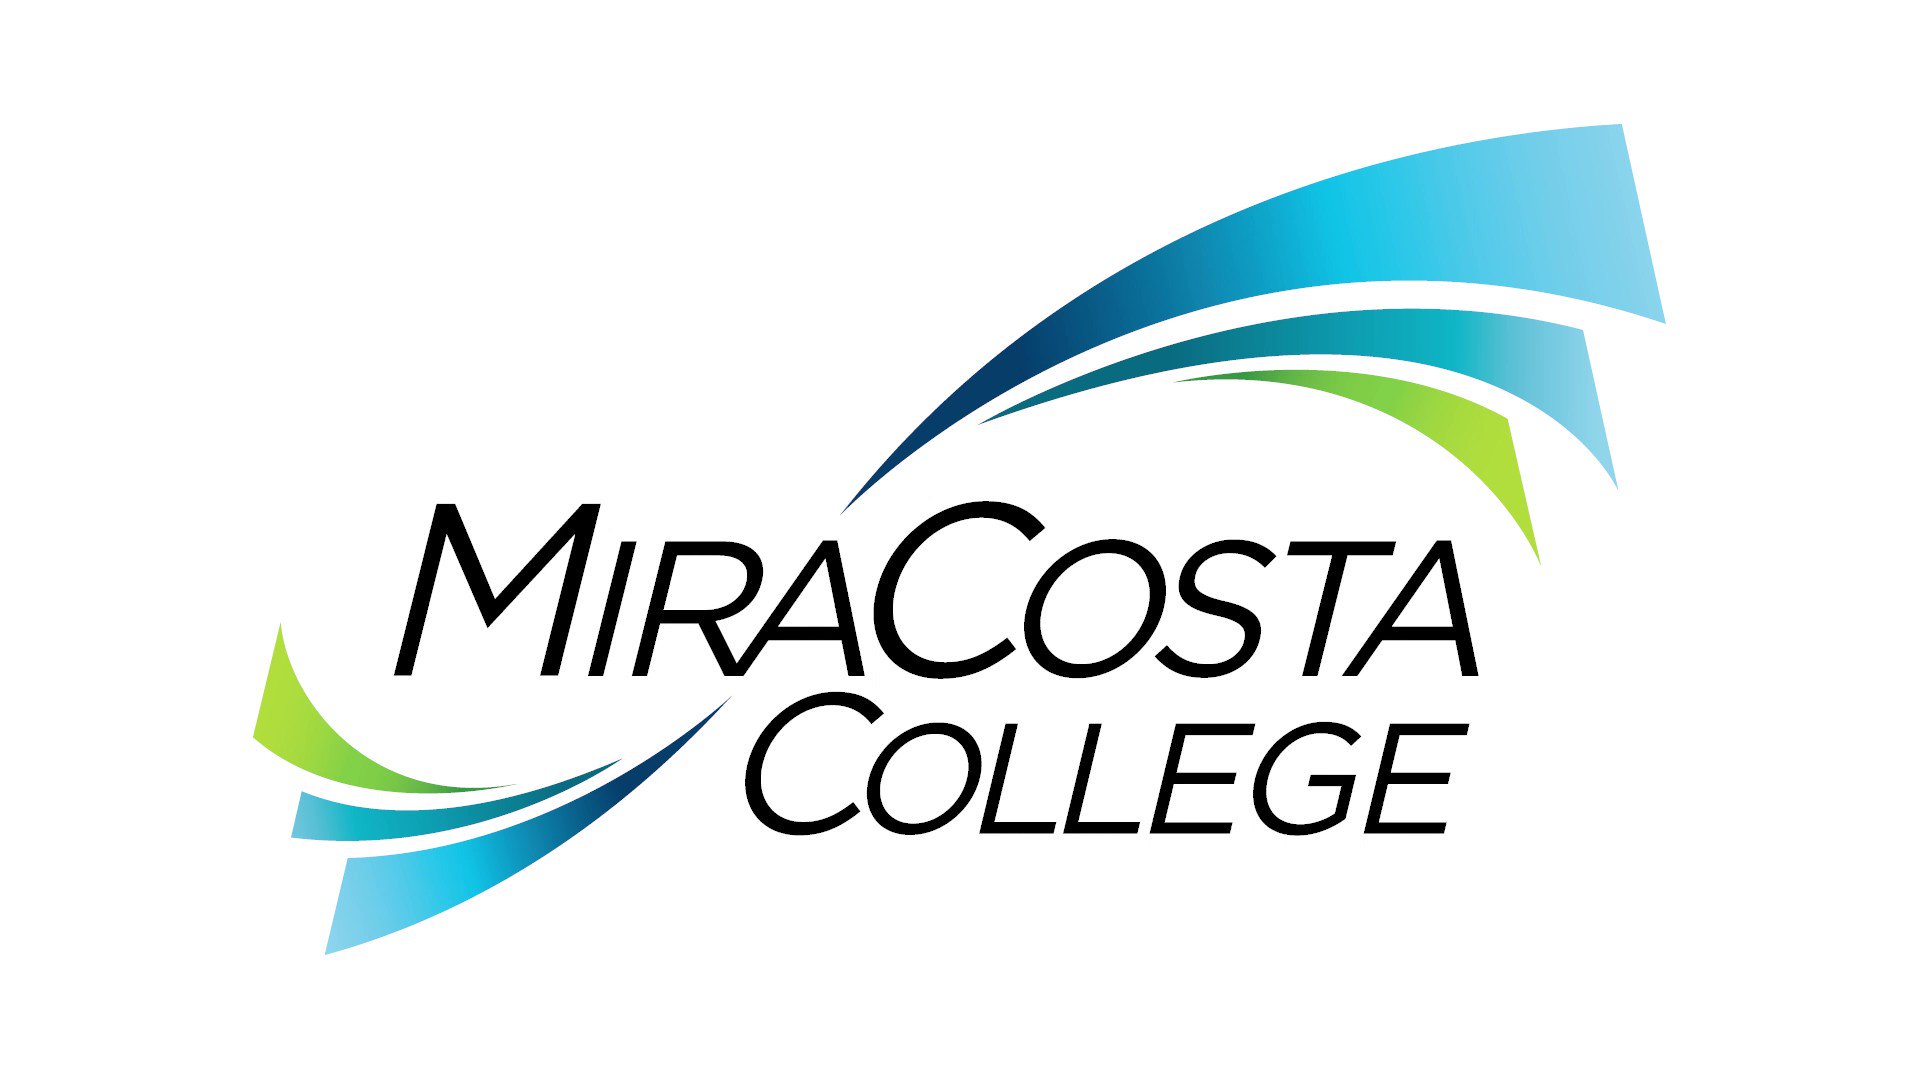 MiraCosta College logo